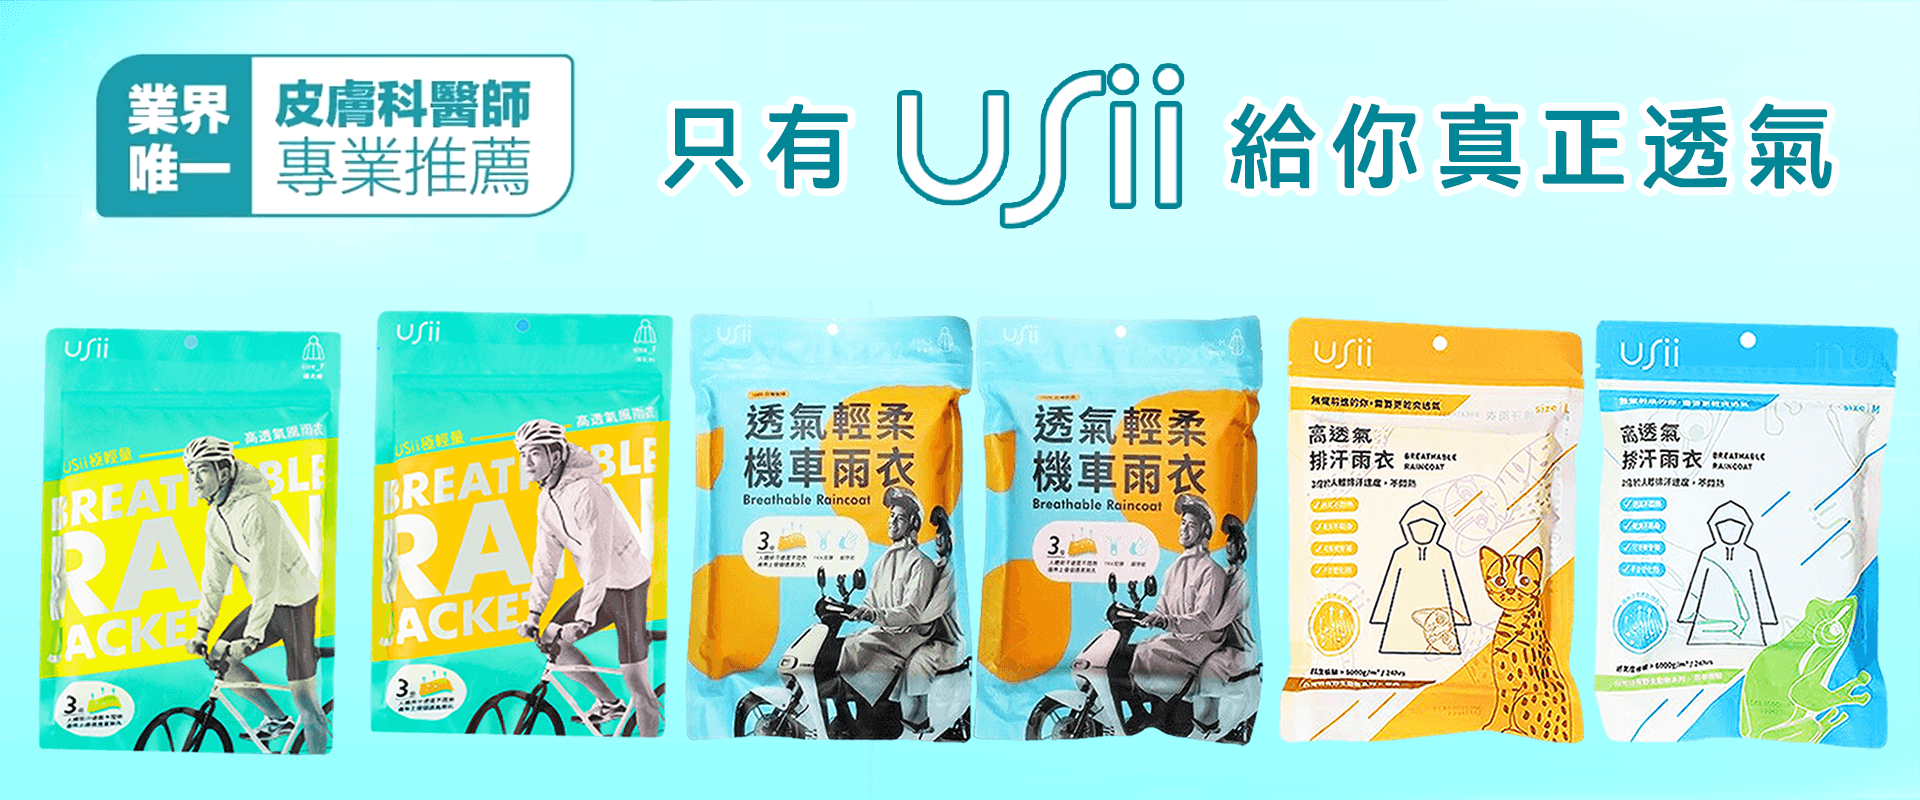 UNIVERSO MART，宇碩協銷有限公司的熱銷系列,如Usii優系的雨衣、保鮮袋、夾鏈袋、保鮮盒